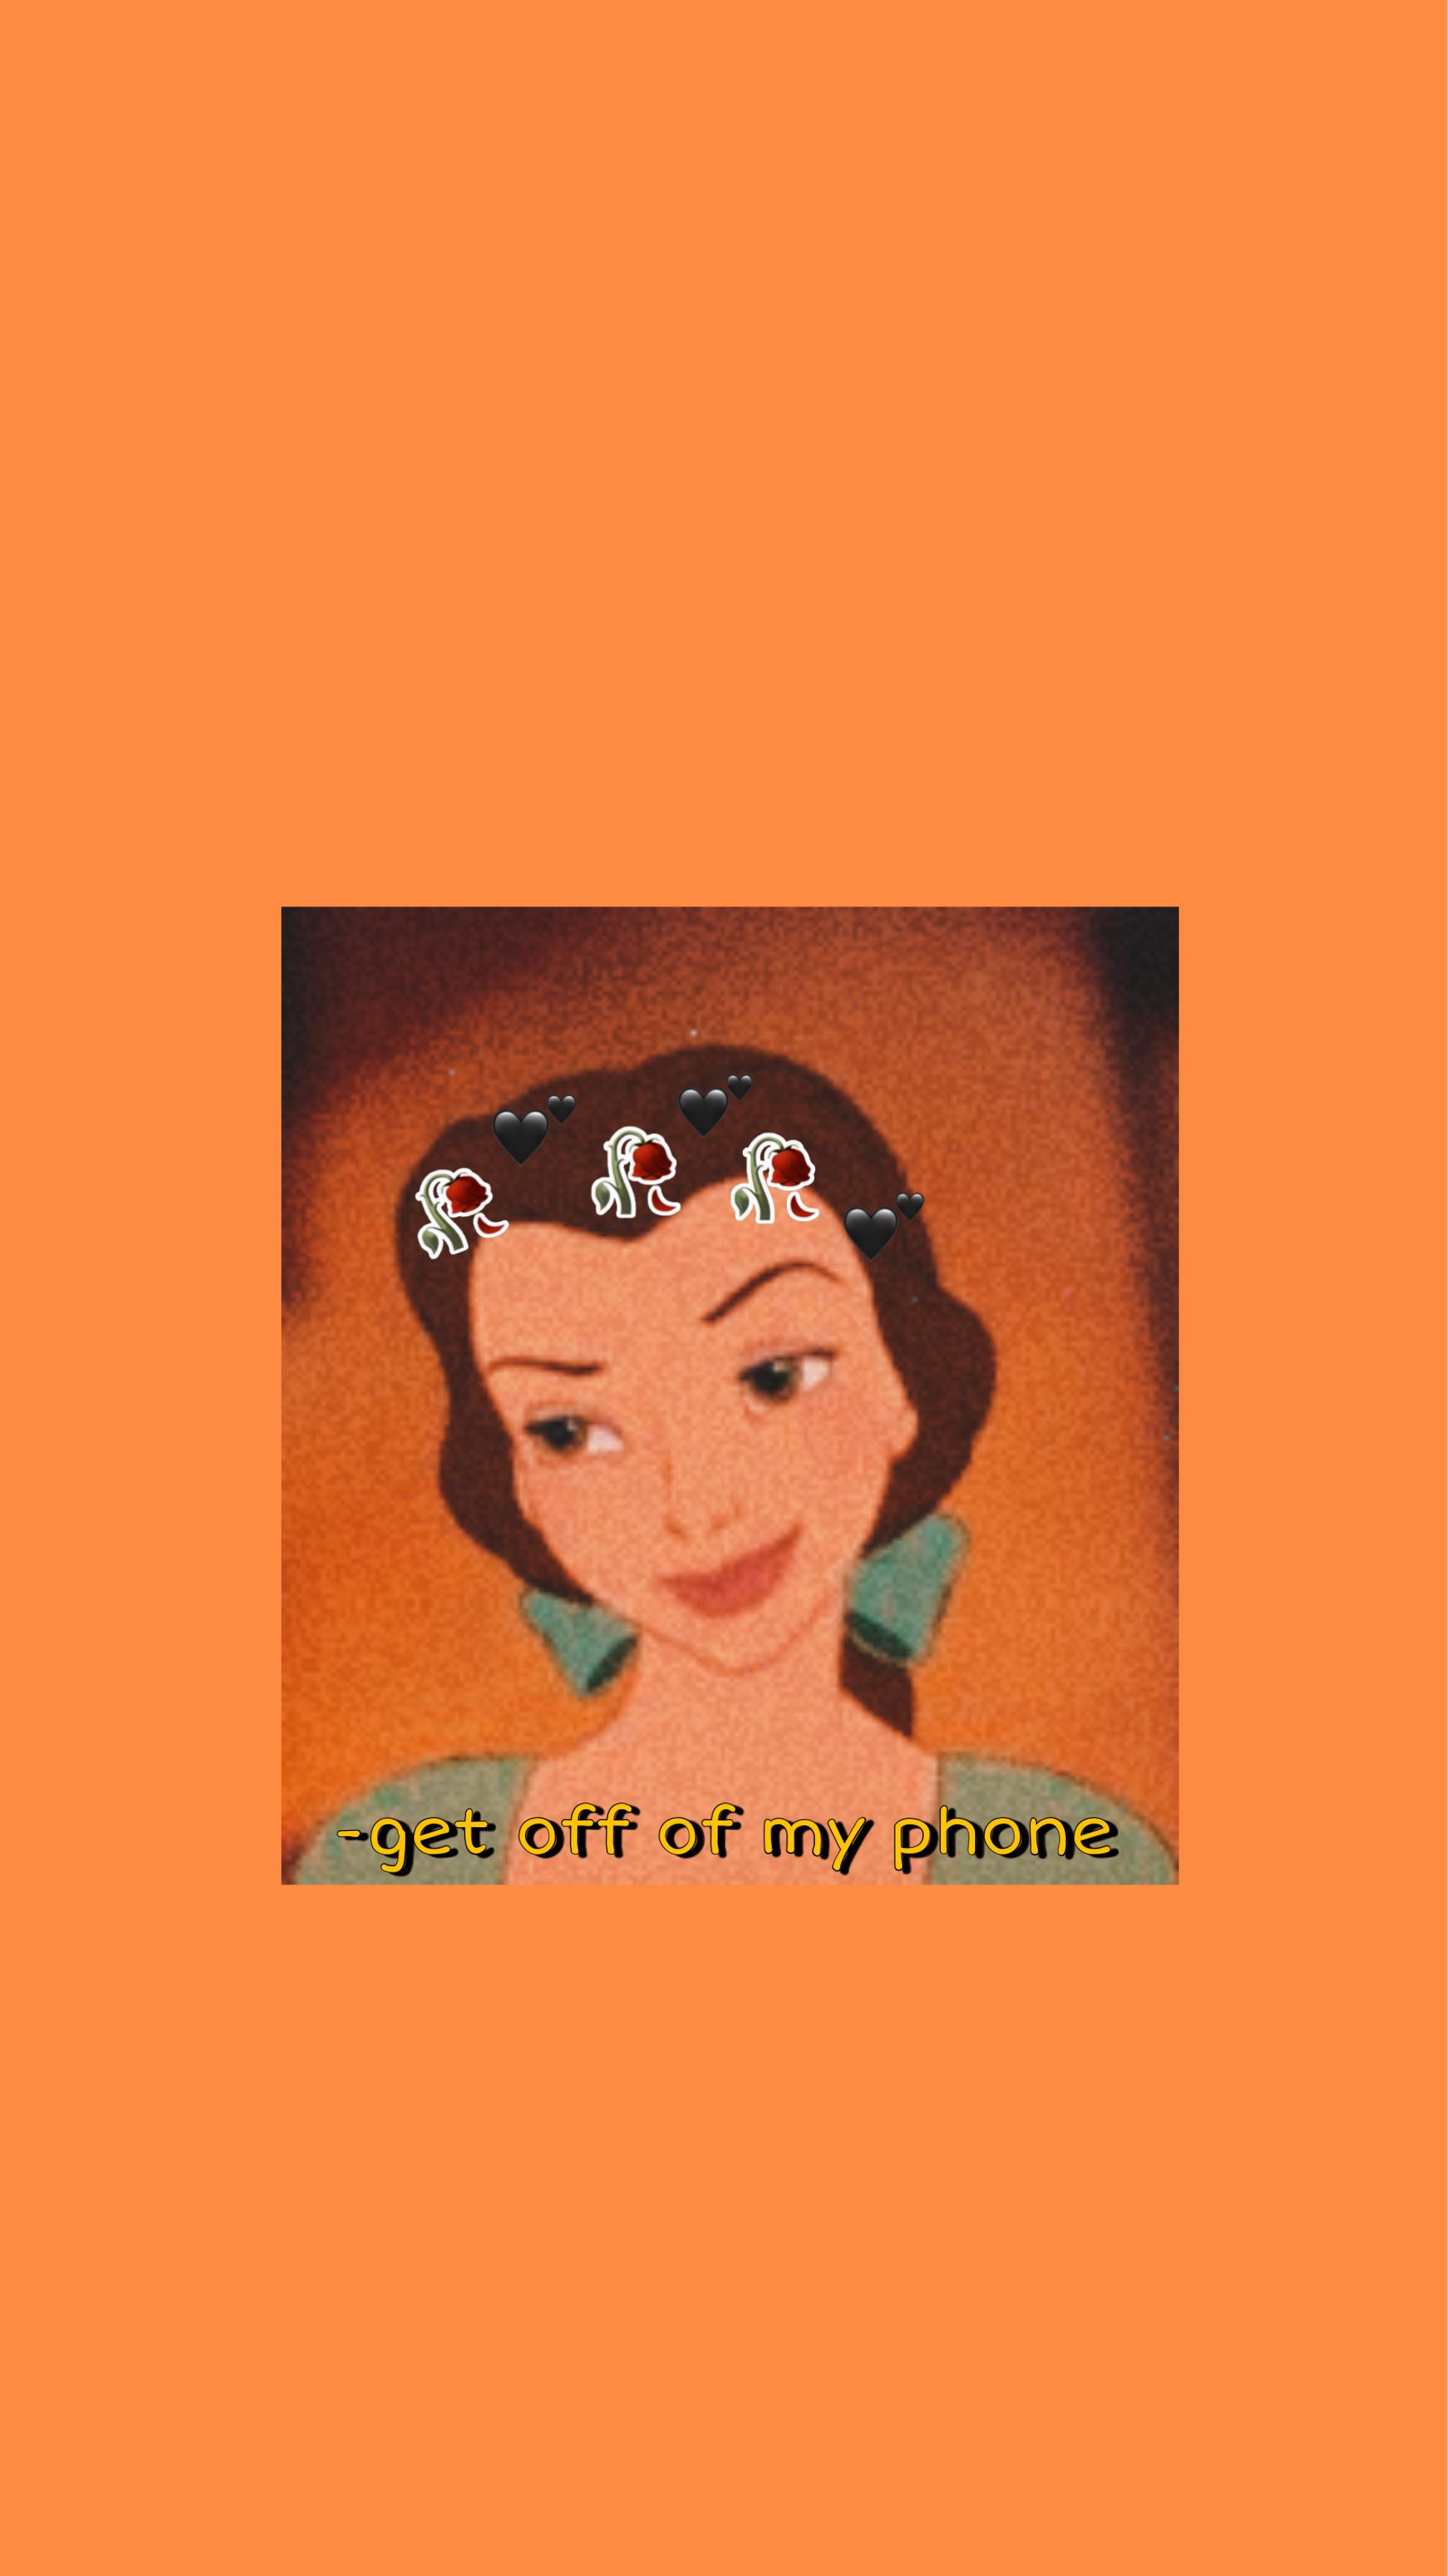 Get off of my phone wallpaper - Belle, princess